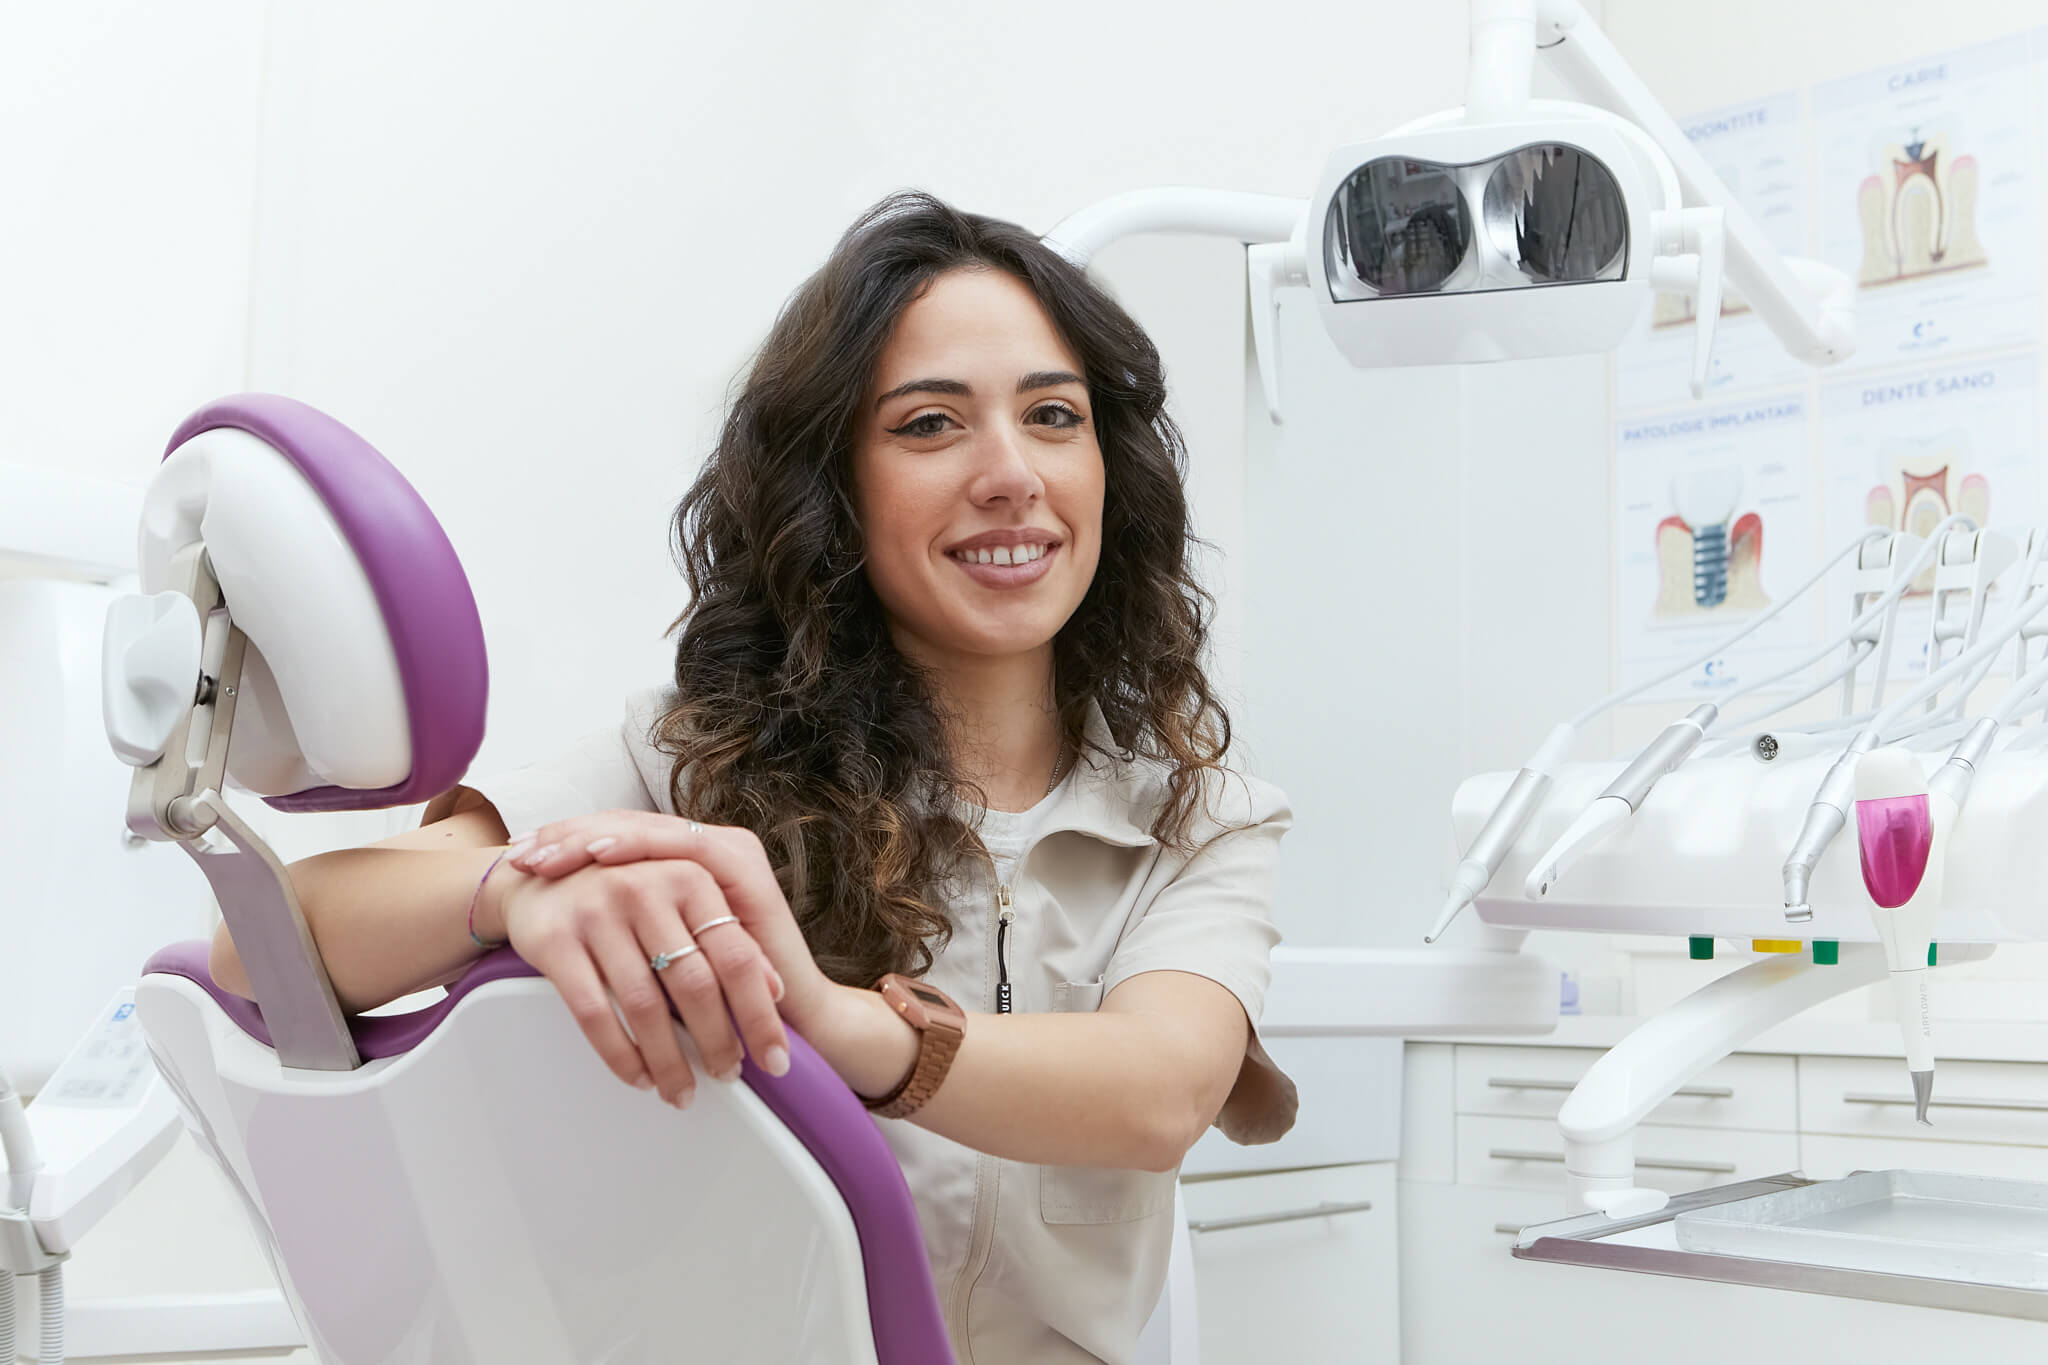 studio dentistico tg dental roma dentista finocchio borghesiana Ilaria ingrasciotta